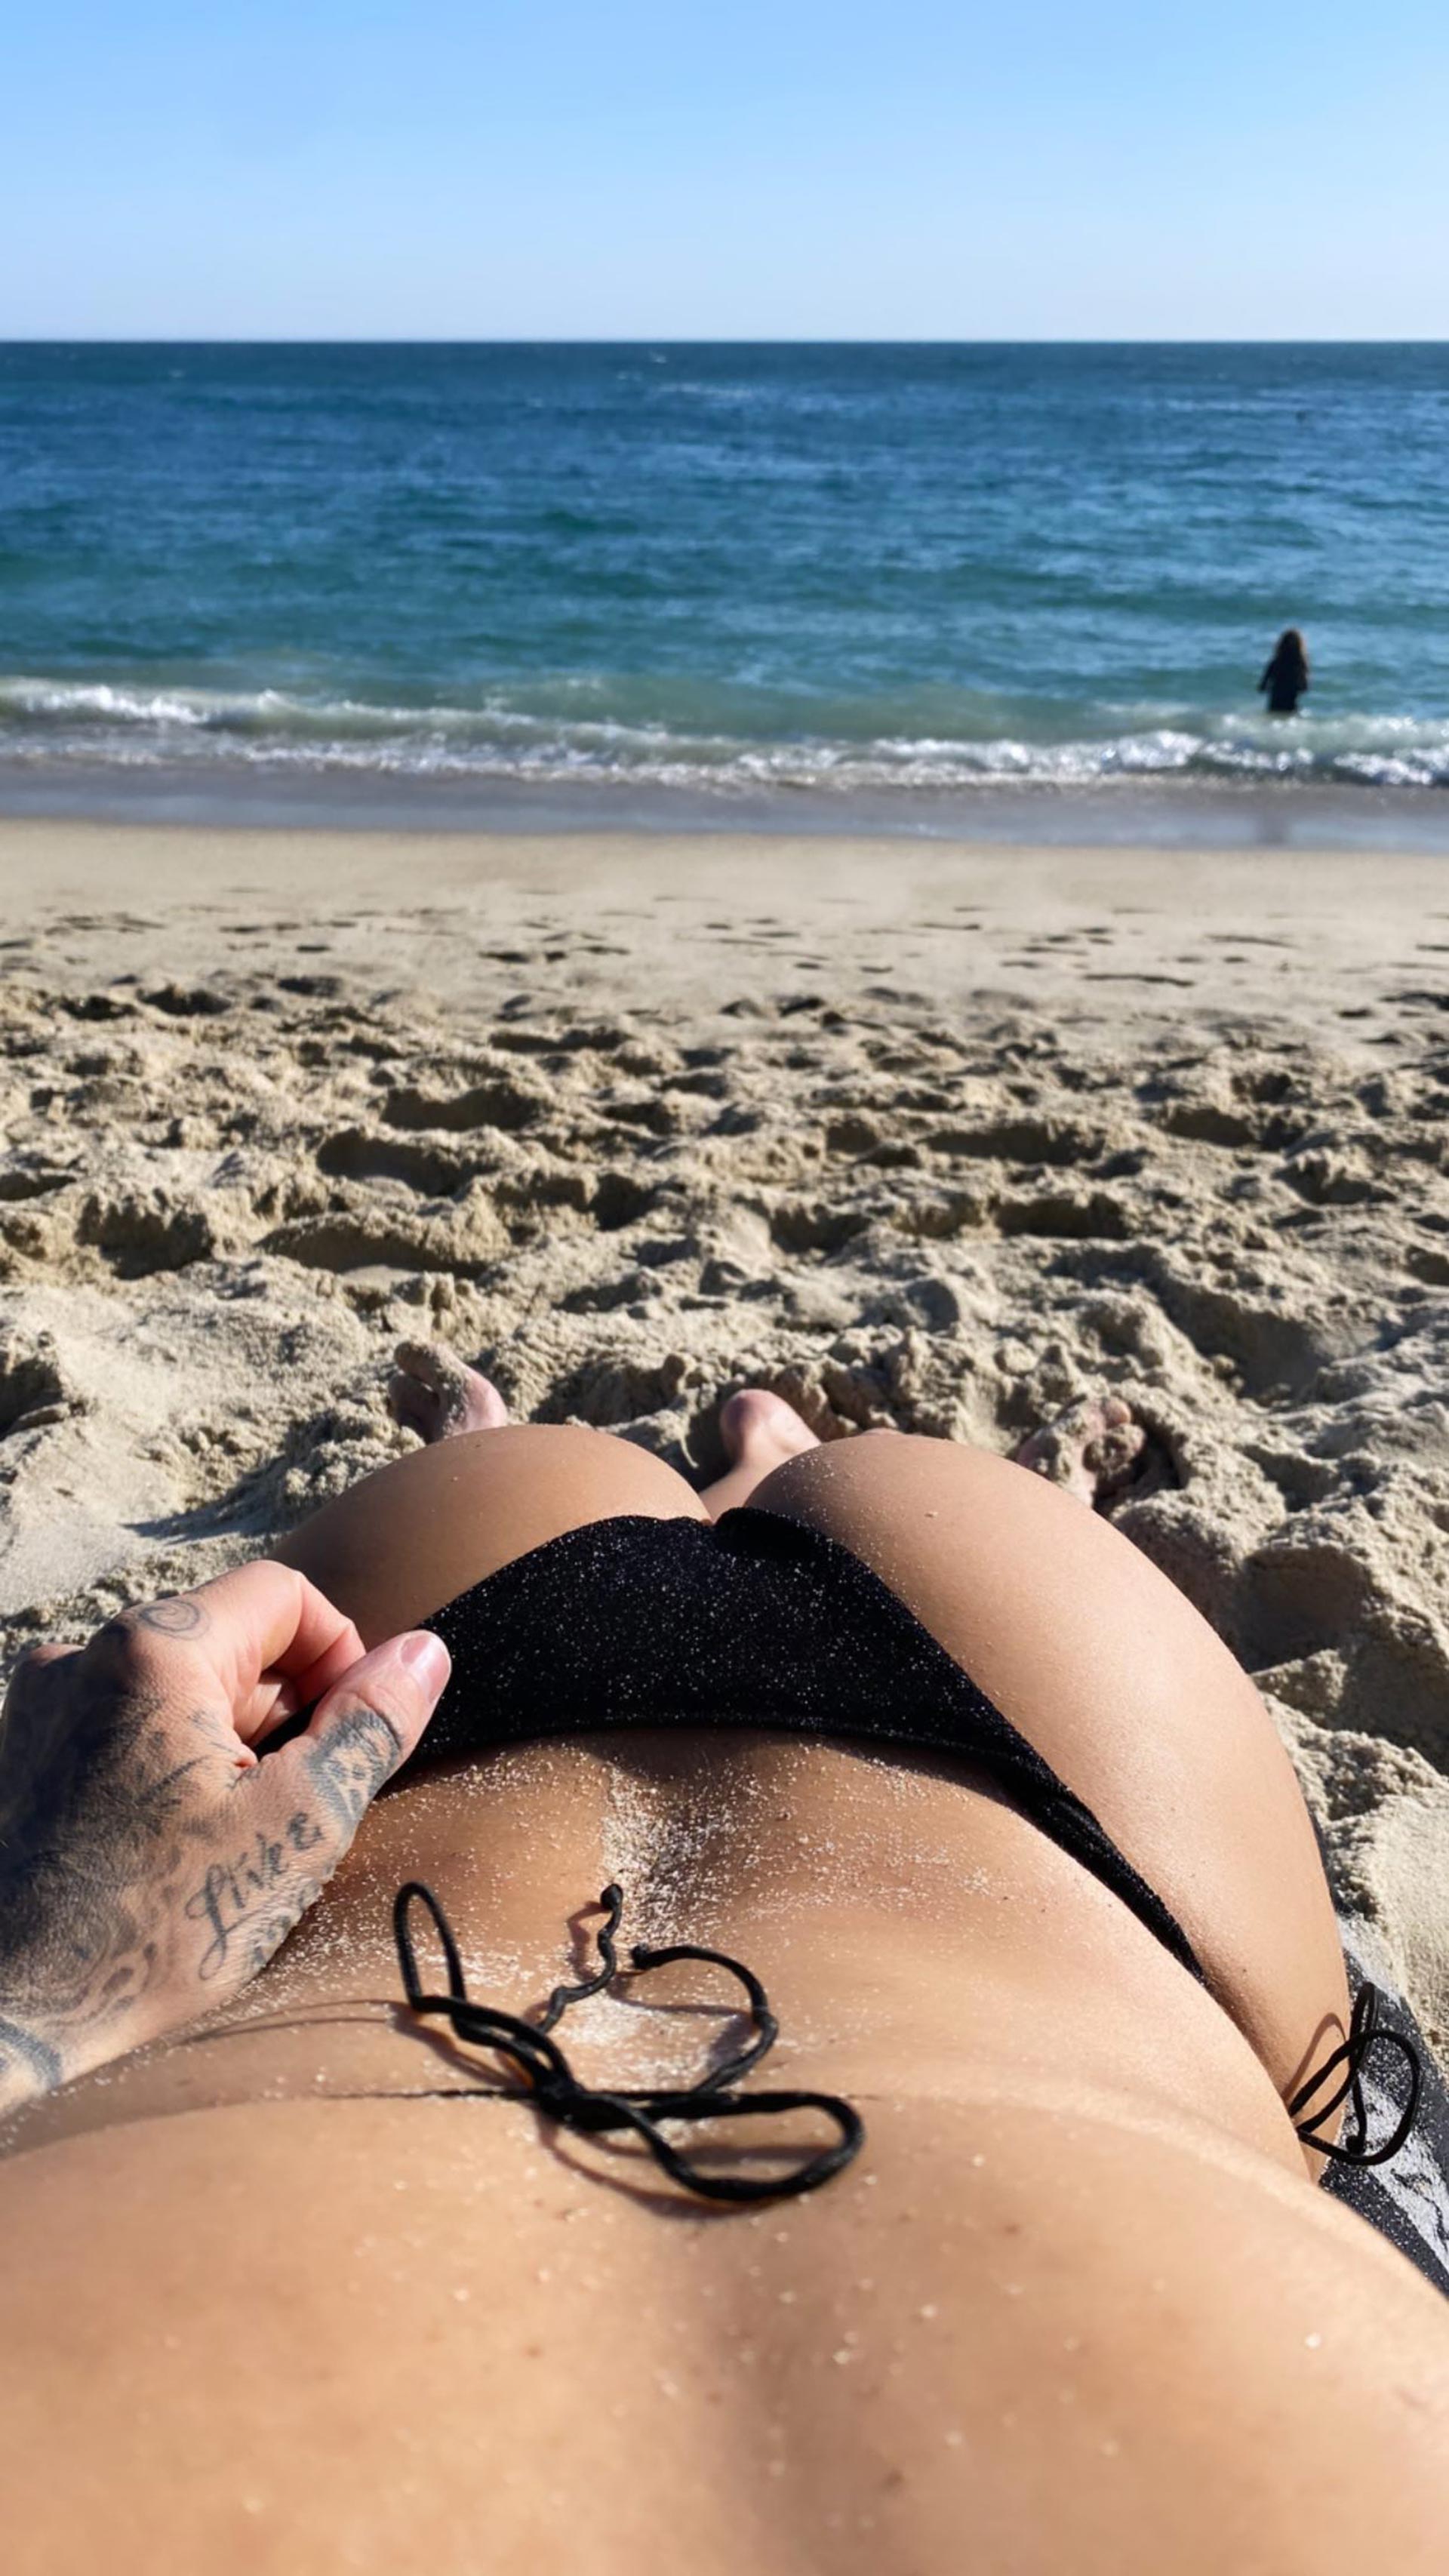 Travis Barker compartió imágenes íntimas de Kourtney Kardashian